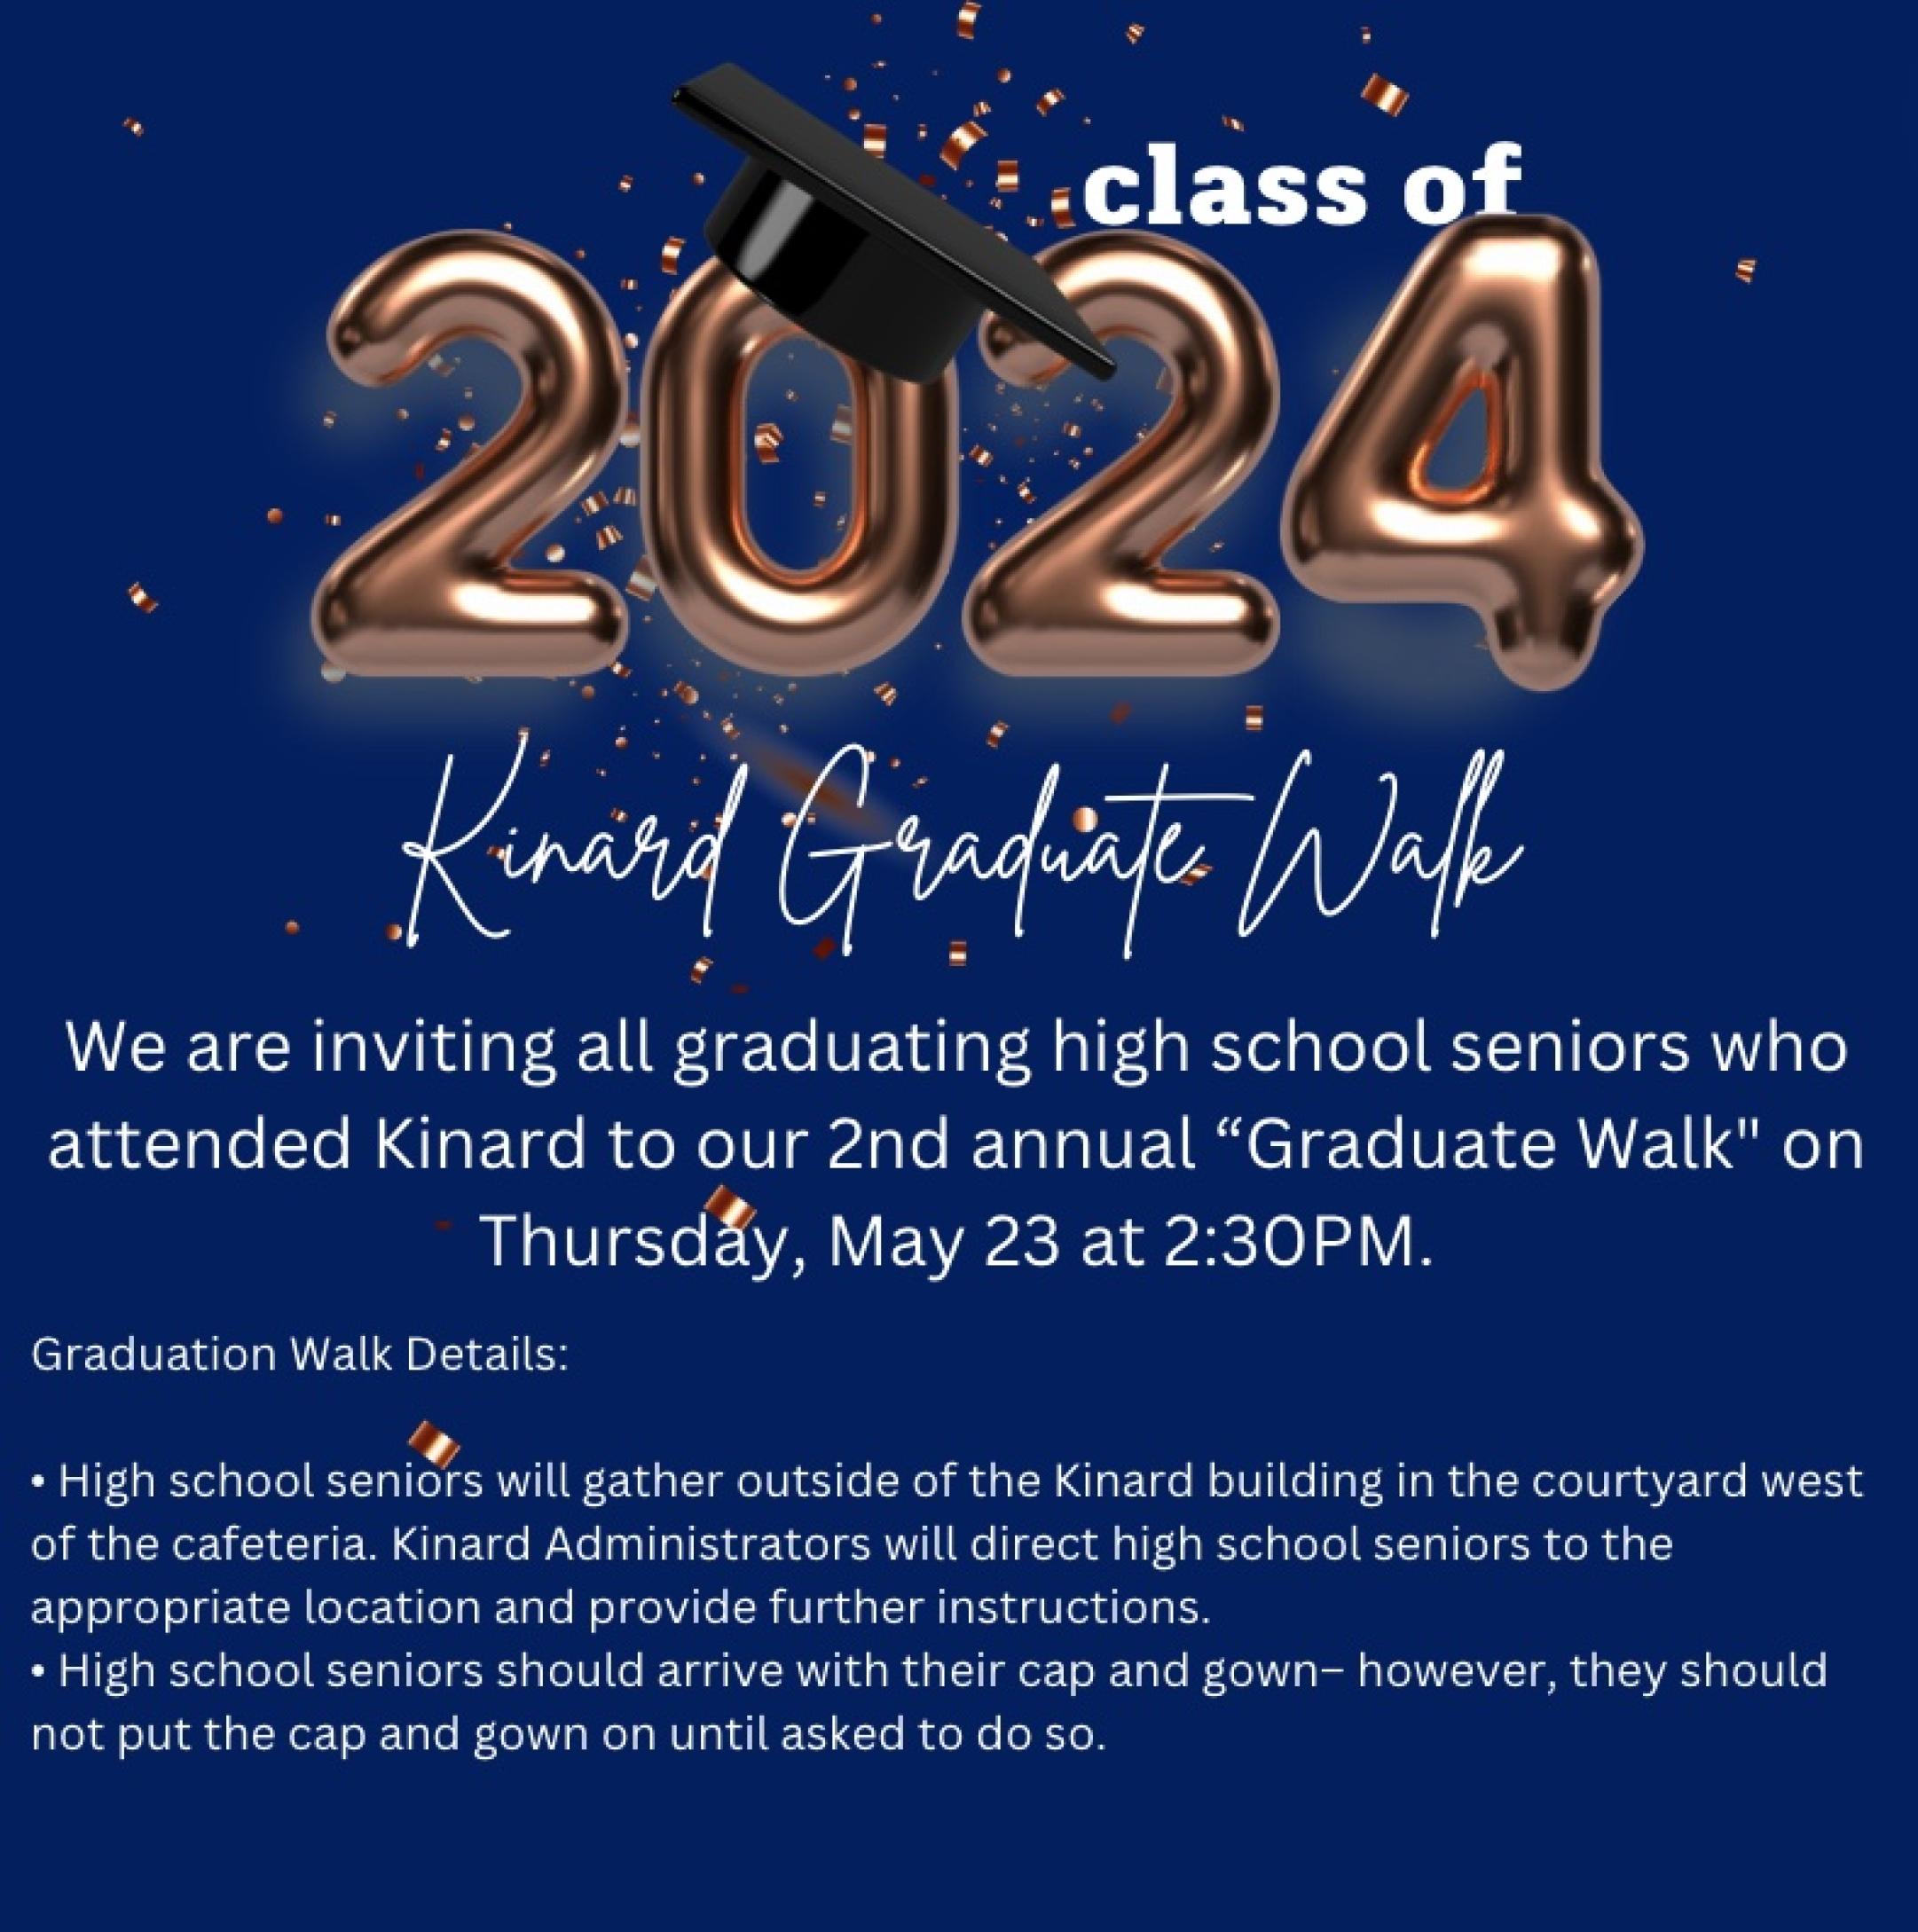 Kinard Graduate Walk Image